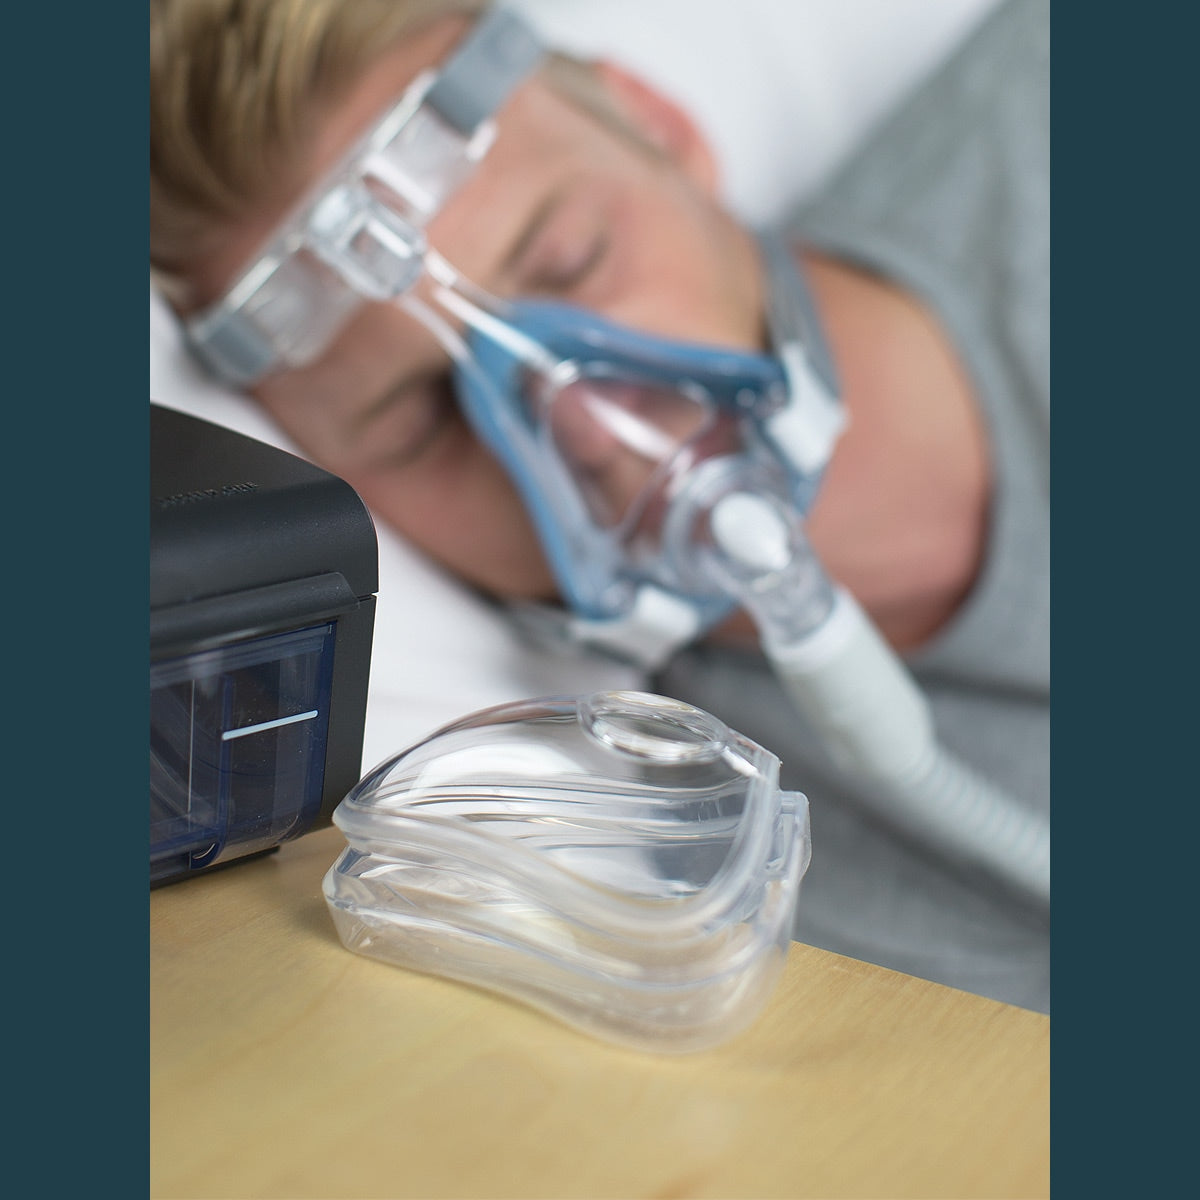 Philips Large Gel Amara Full Face Mask Cpap Cushion Personal Health  Respiratory Equipment, Professional Equipment, Professional Anesthesia &  Respiratory Care Supplies, Professional Health Supplies